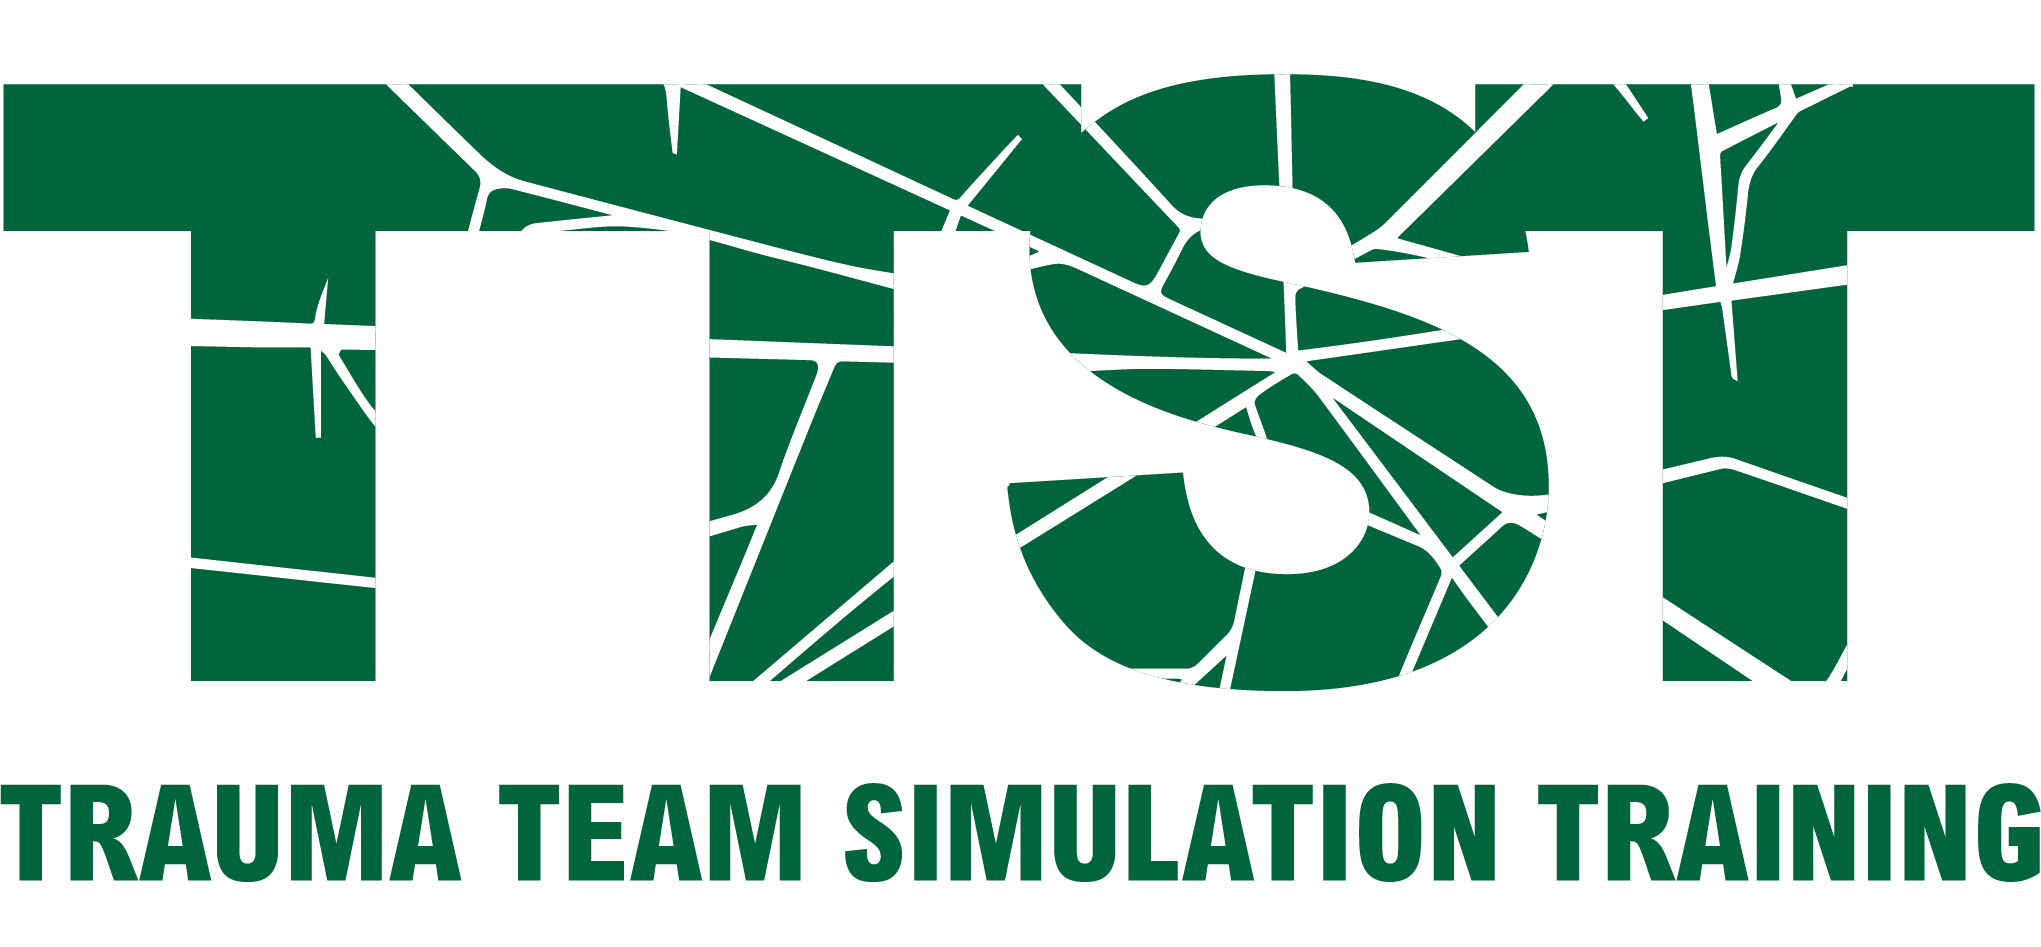 Trauma Team Simulation Training logo